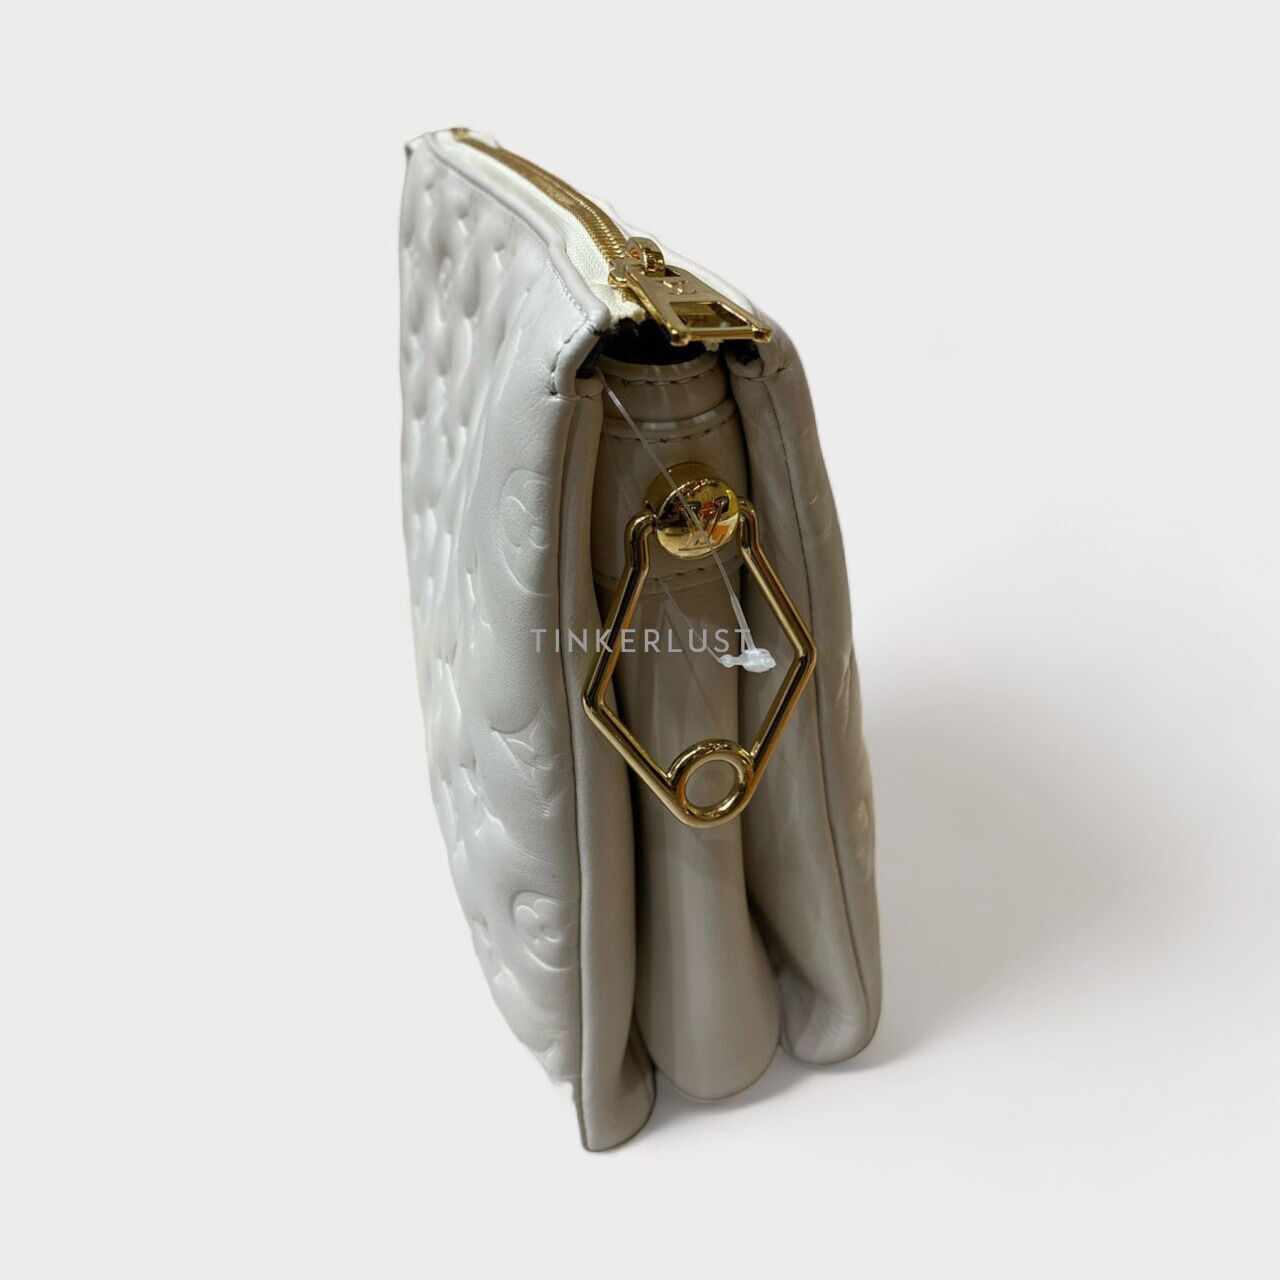 Louis Vuitton Coussin PM Monogram Embossed Cream GHW Shoulder Bag